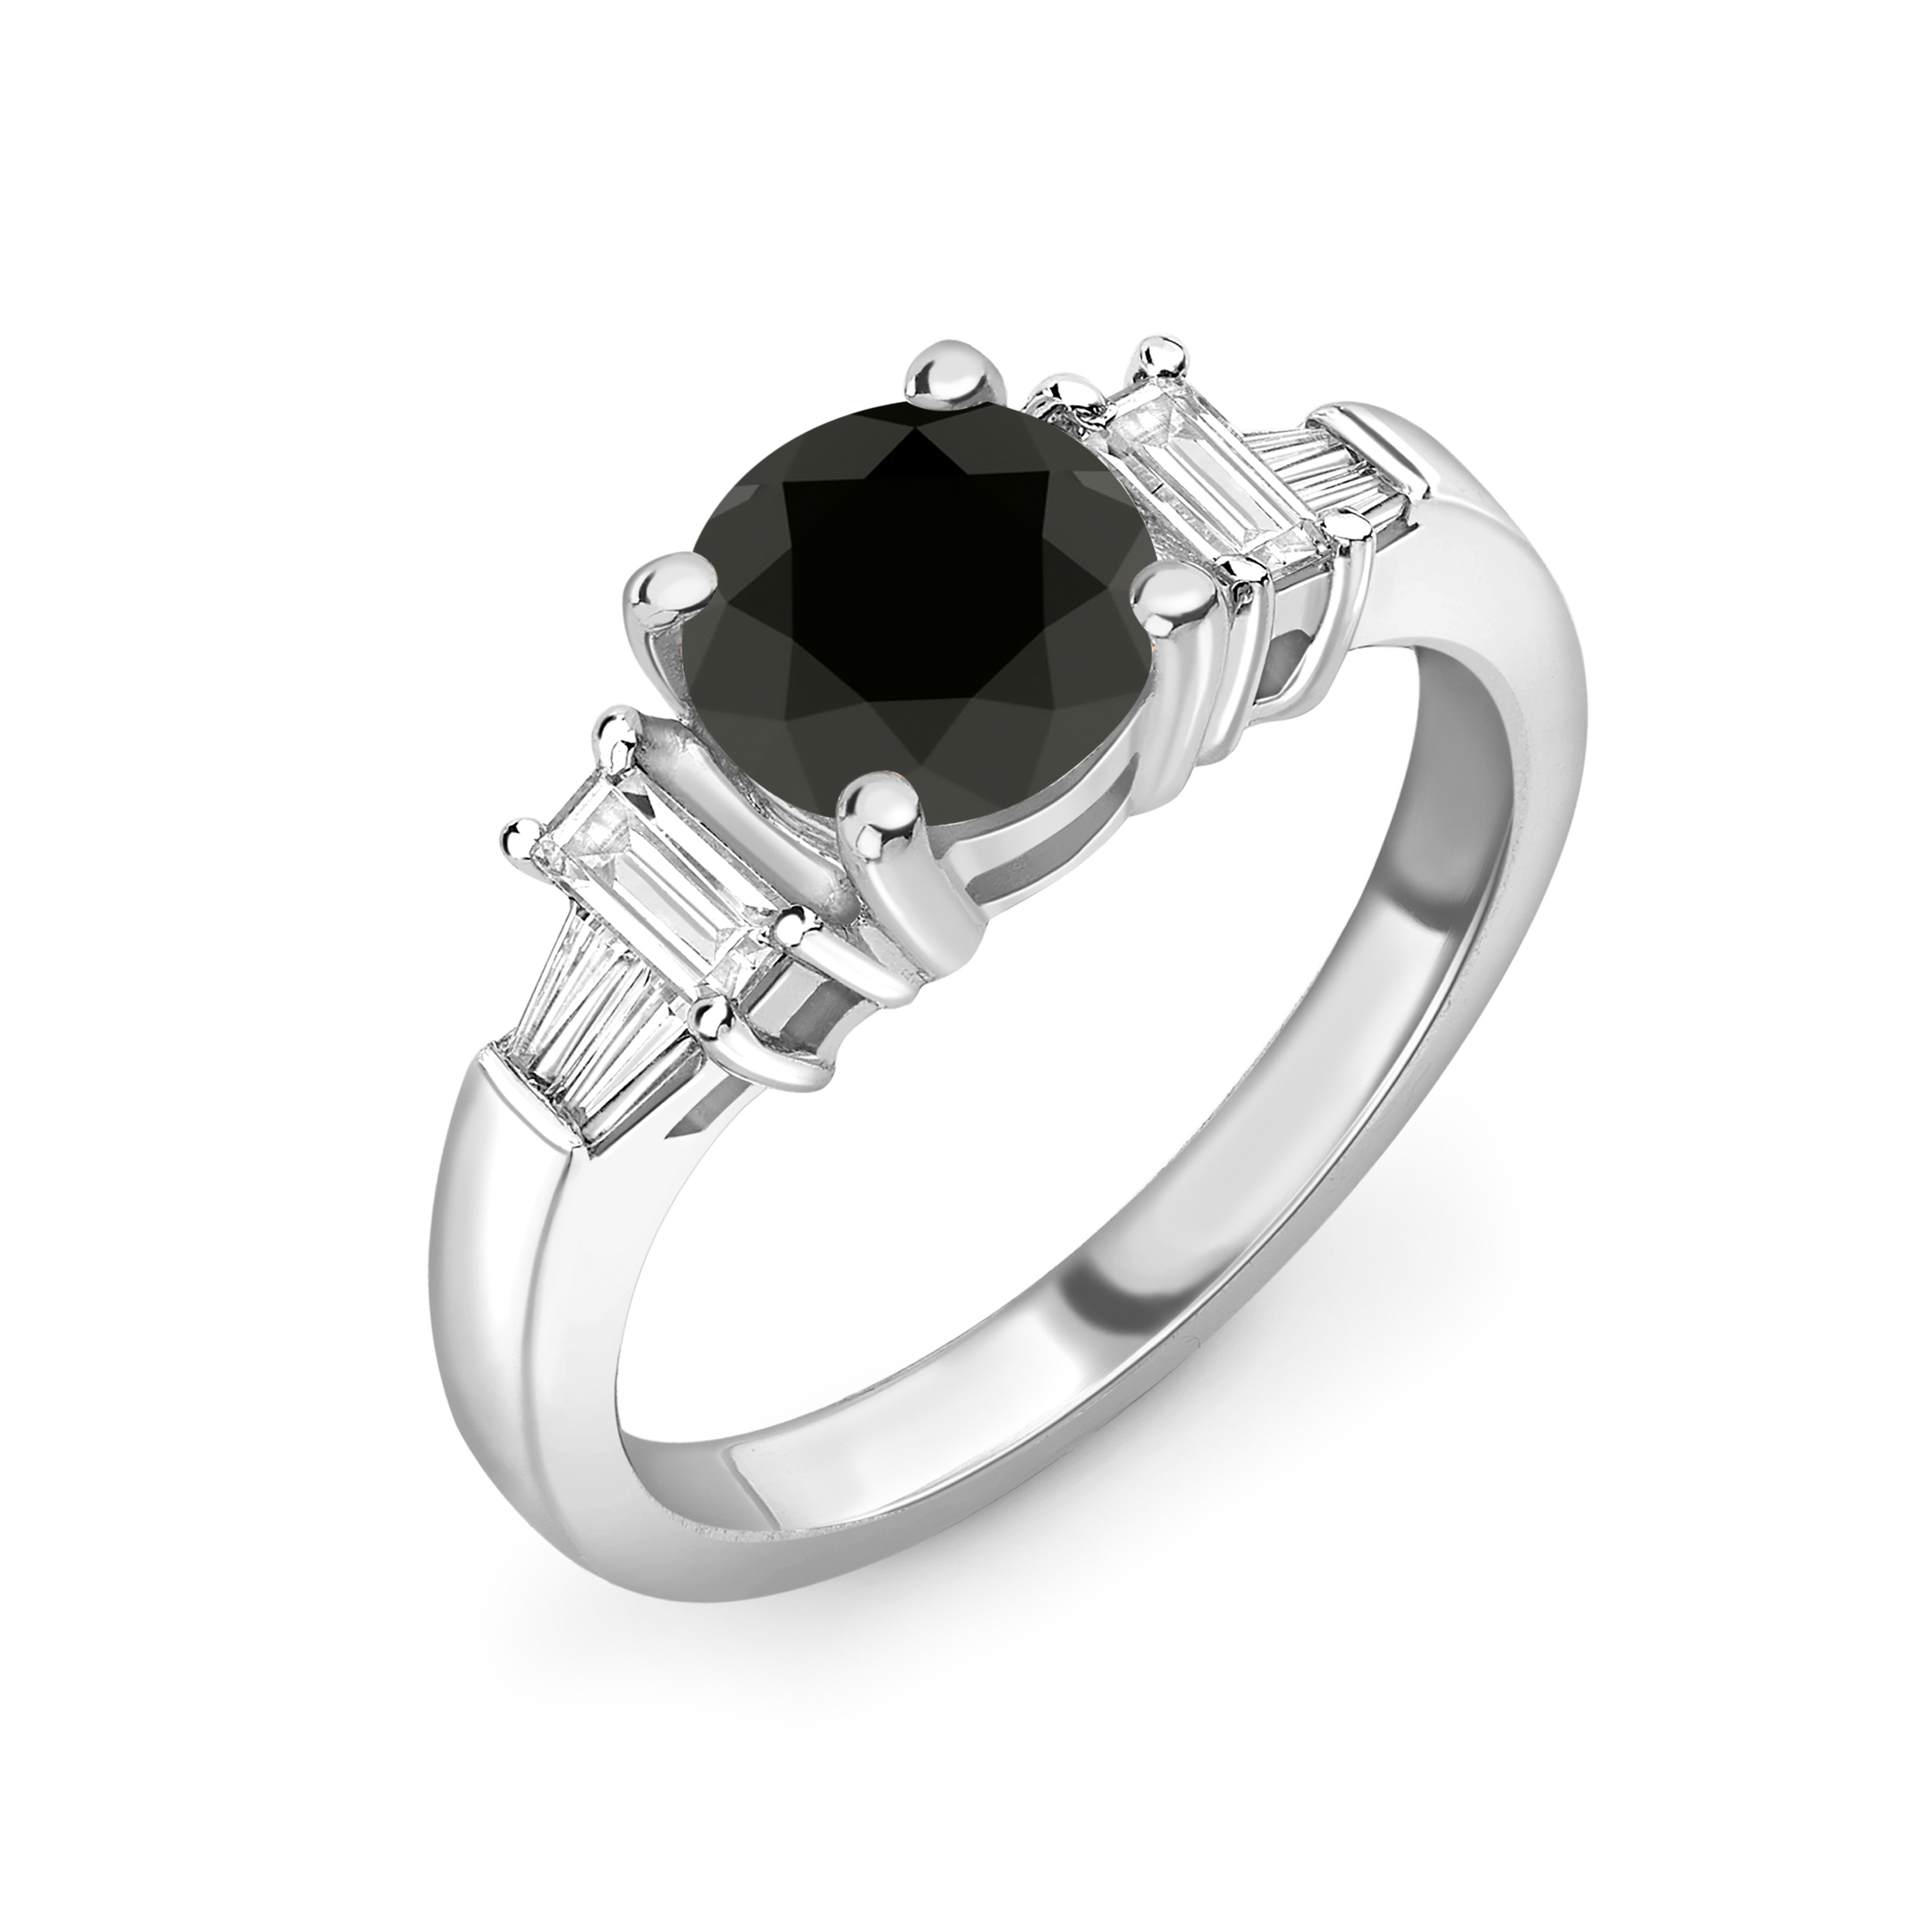 Unique Baguette and Round Diamond Black Diamond Rings for Women